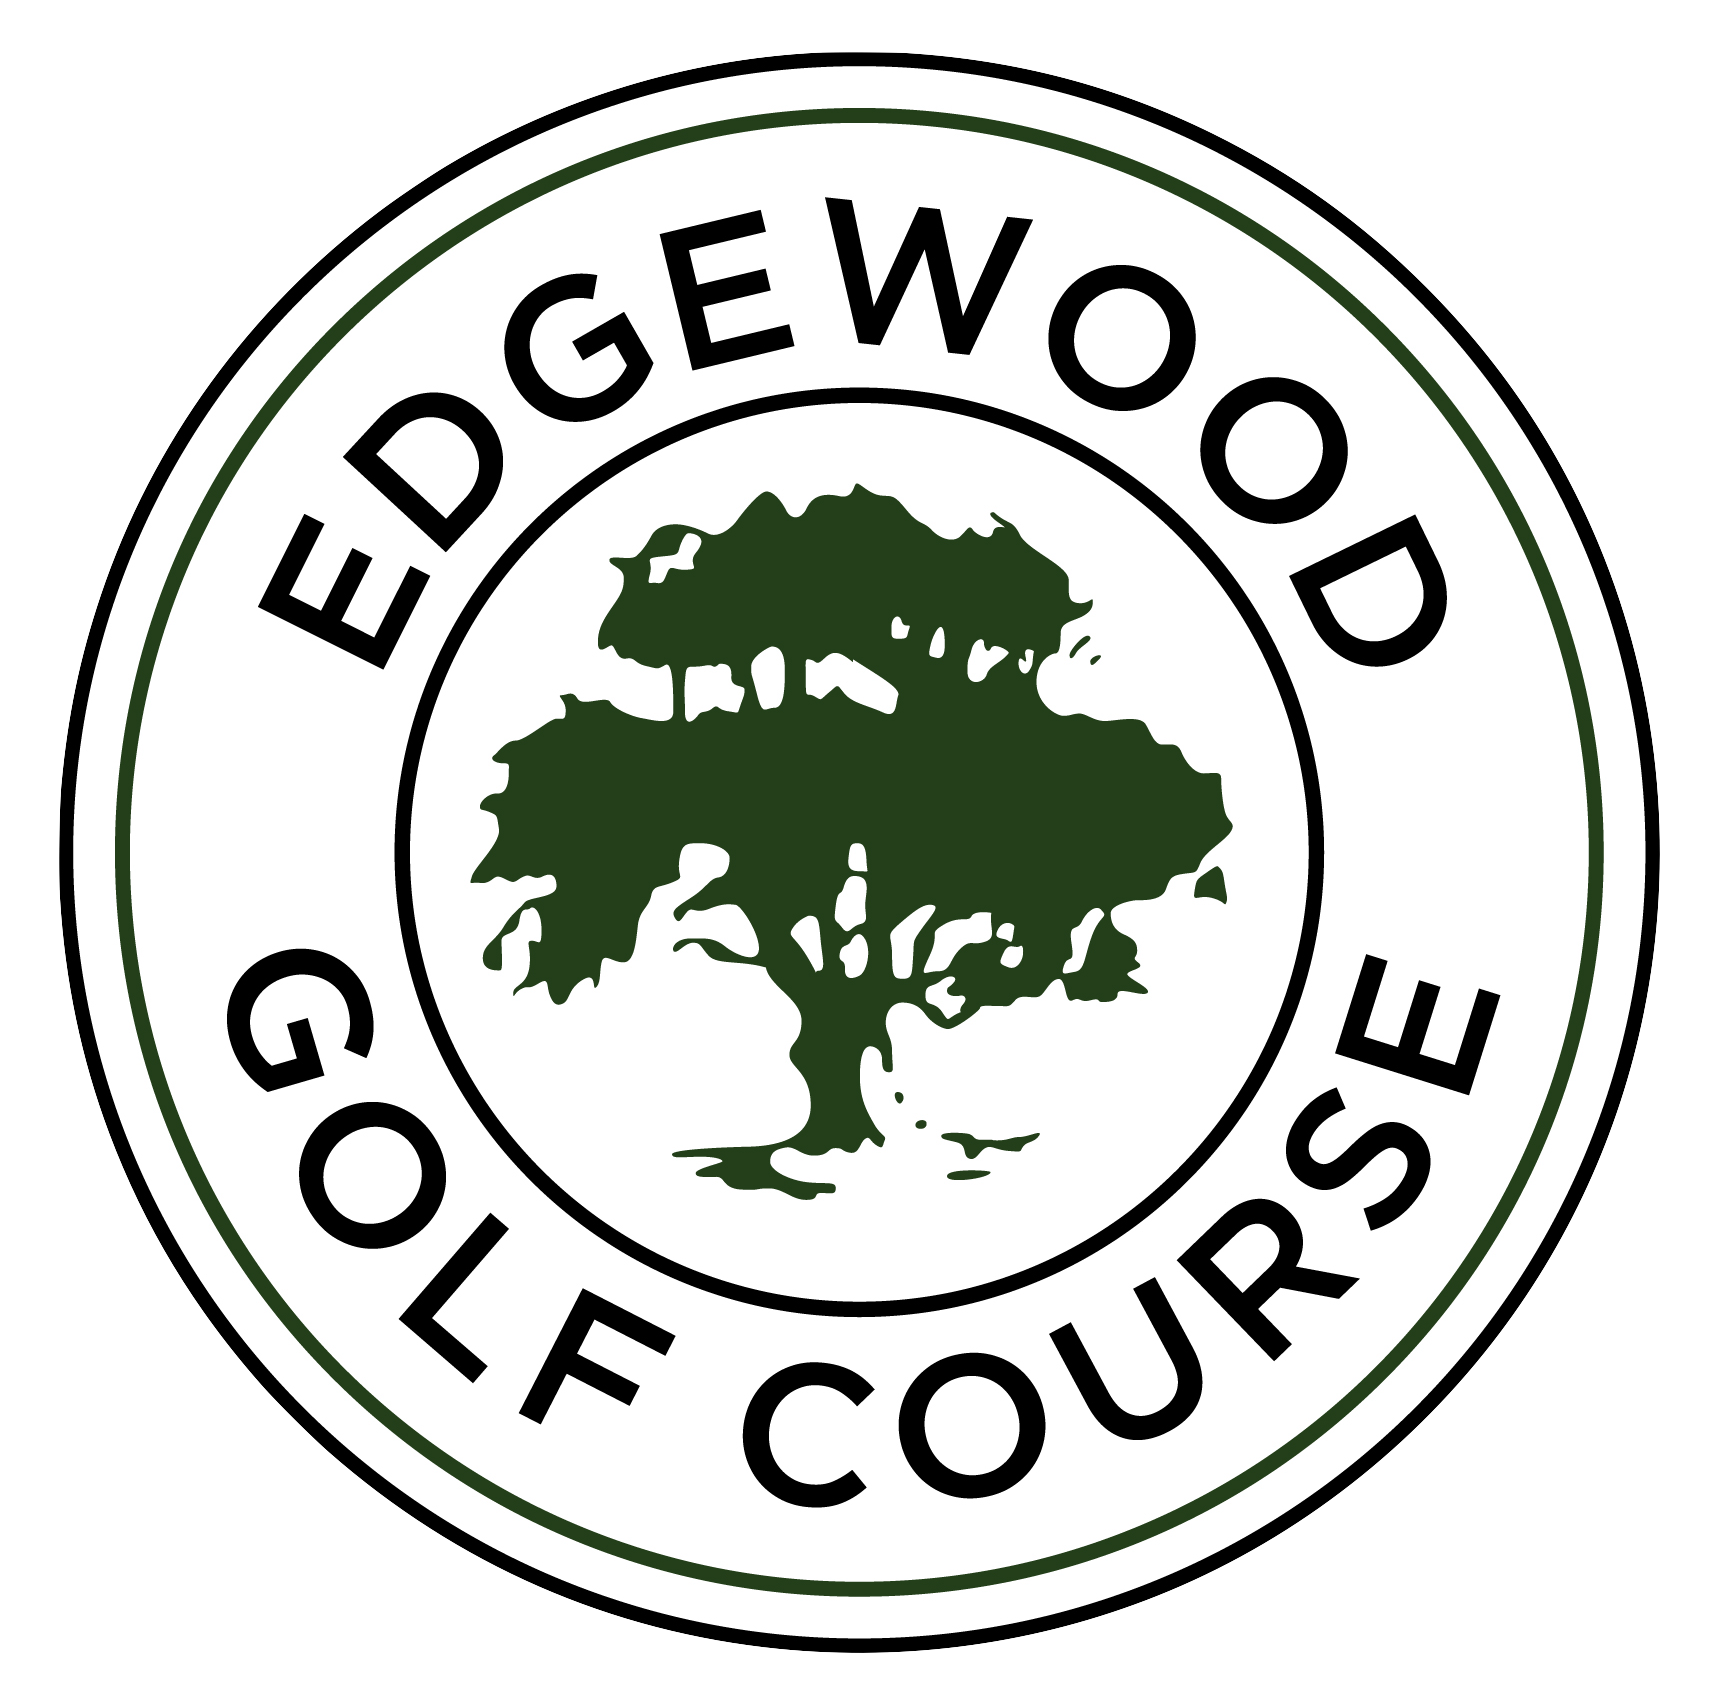 Edgewood Golf